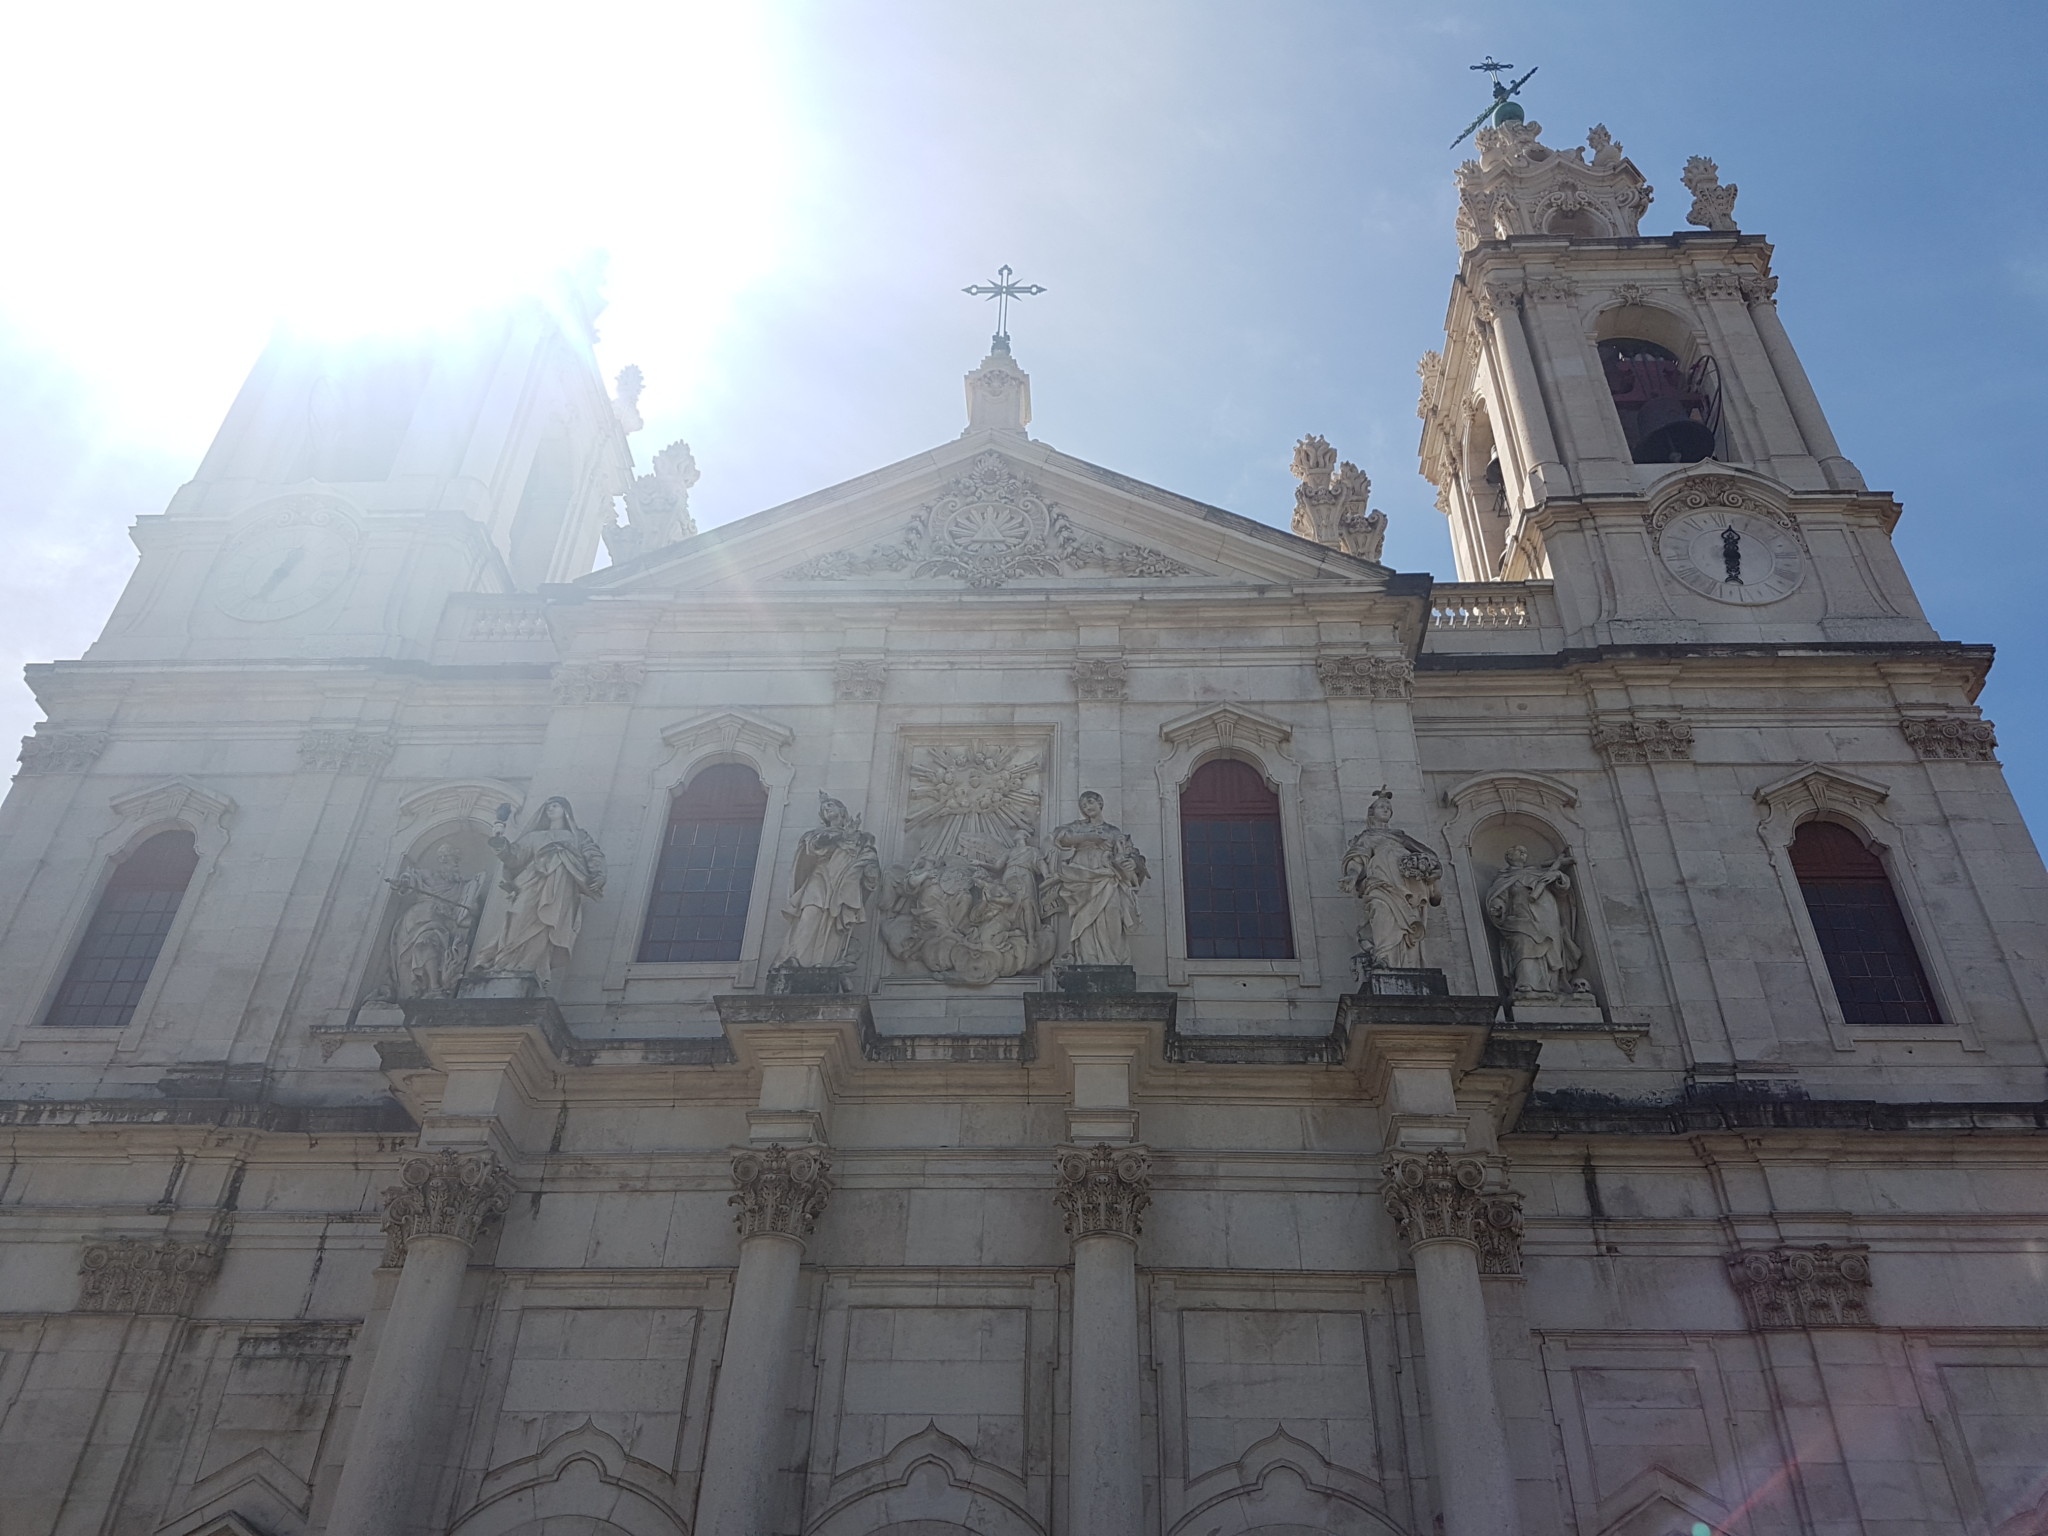 Outside the Basilica da Estrela